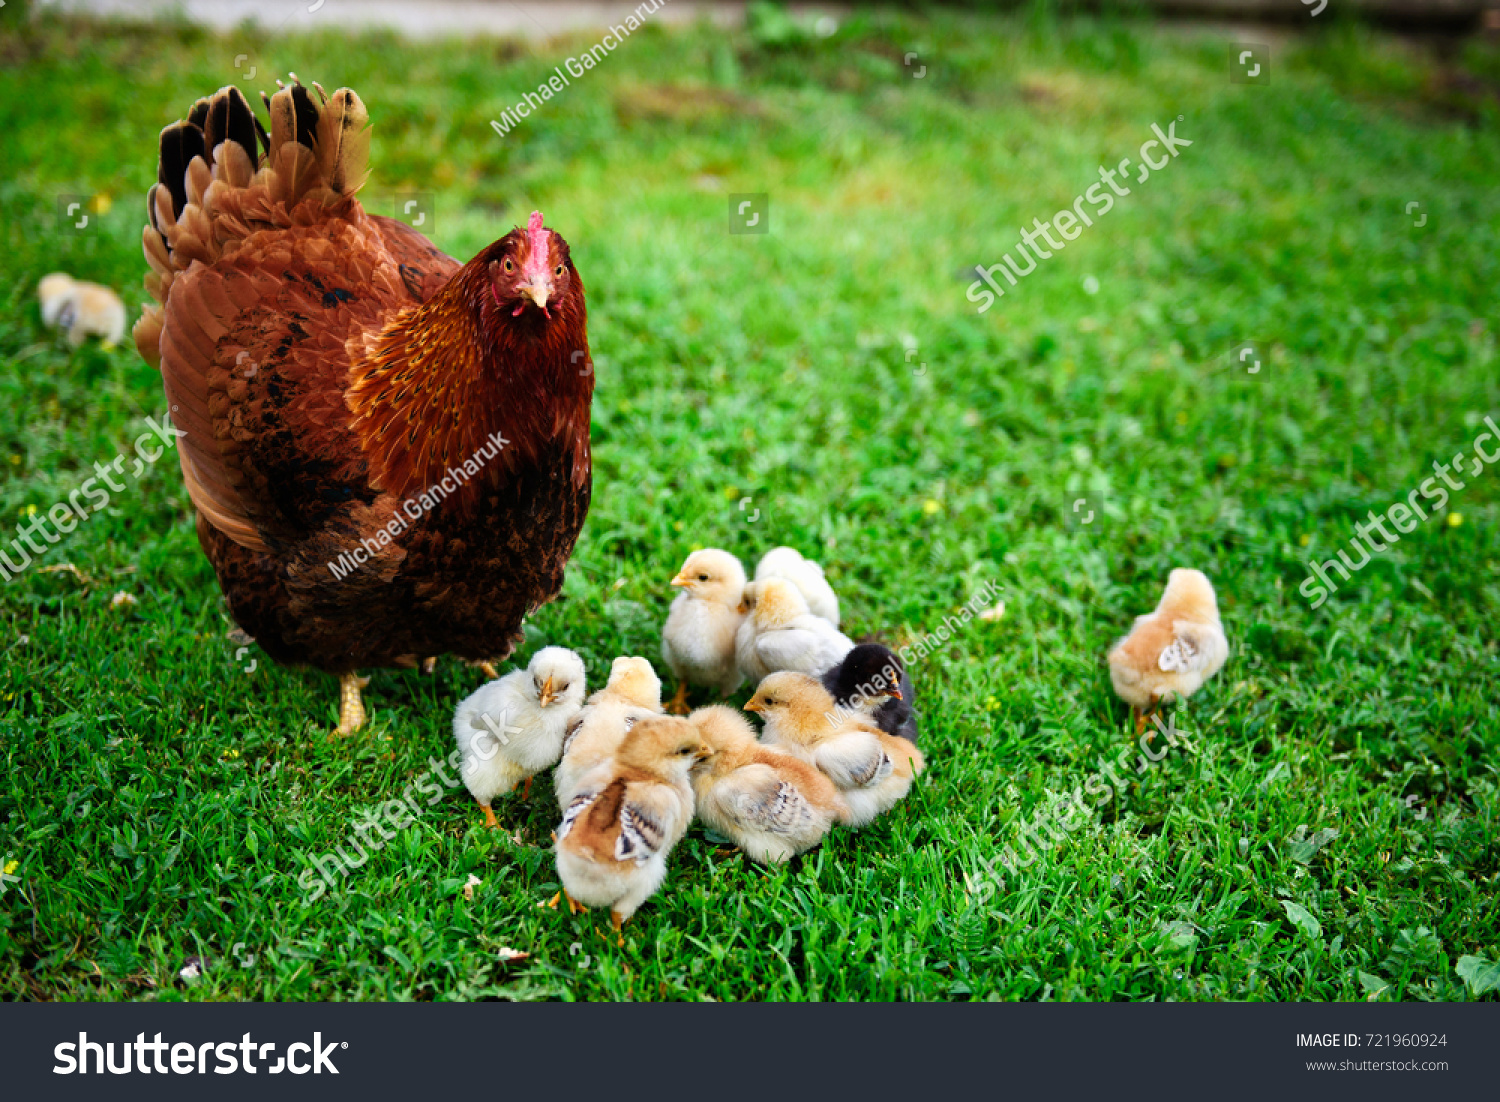 A Rhode Island Red chicken near baby chicks on the grass #721960924